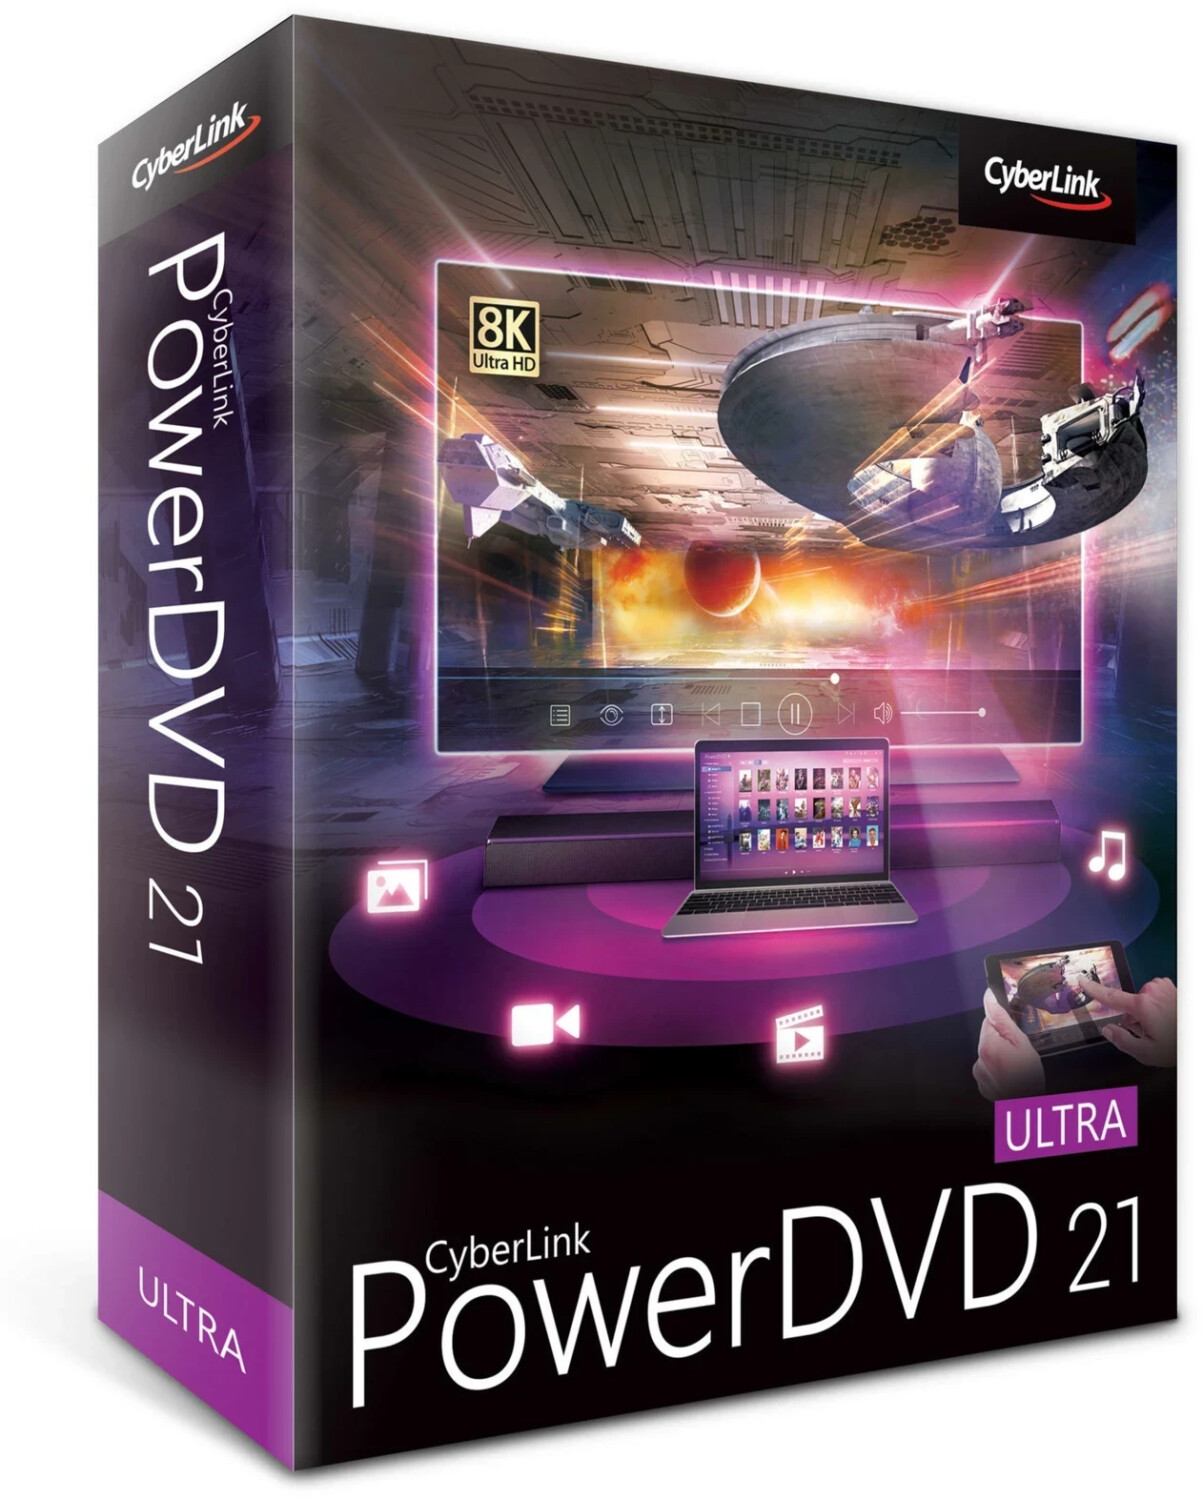 powerdvd 20 ultra download